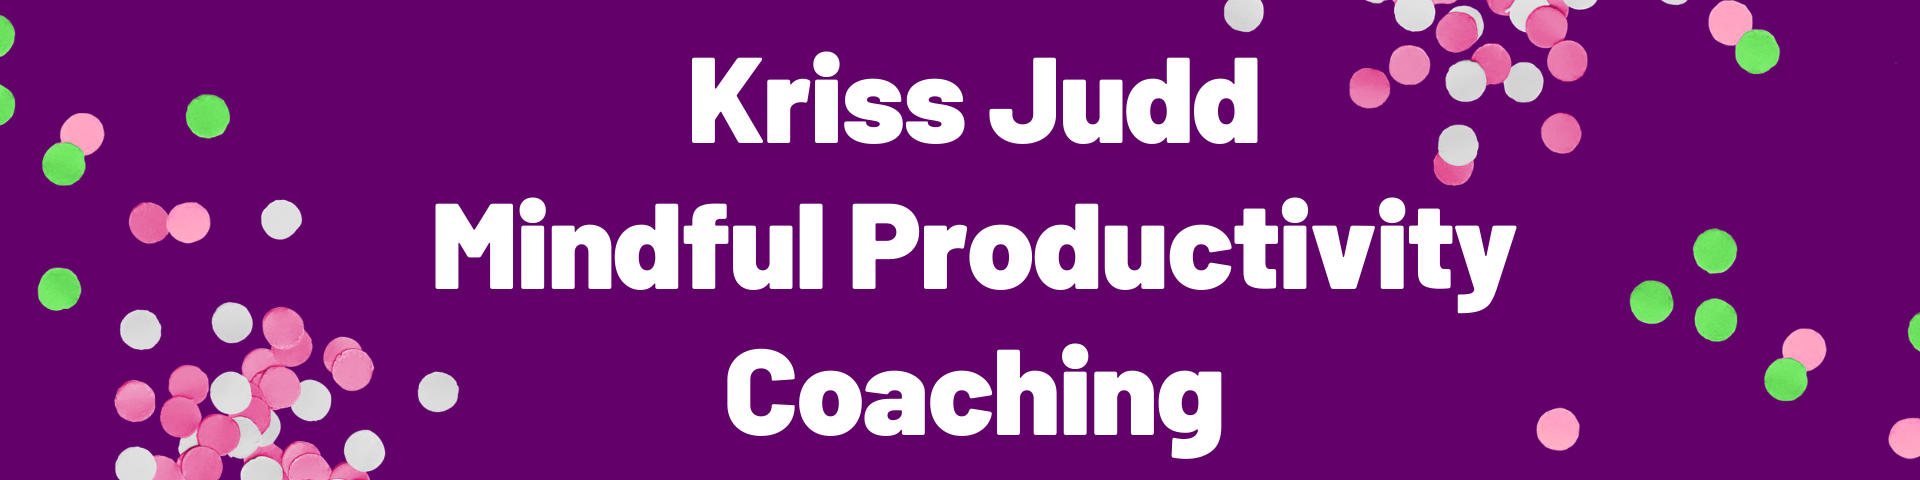 Kriss Judd Coaching